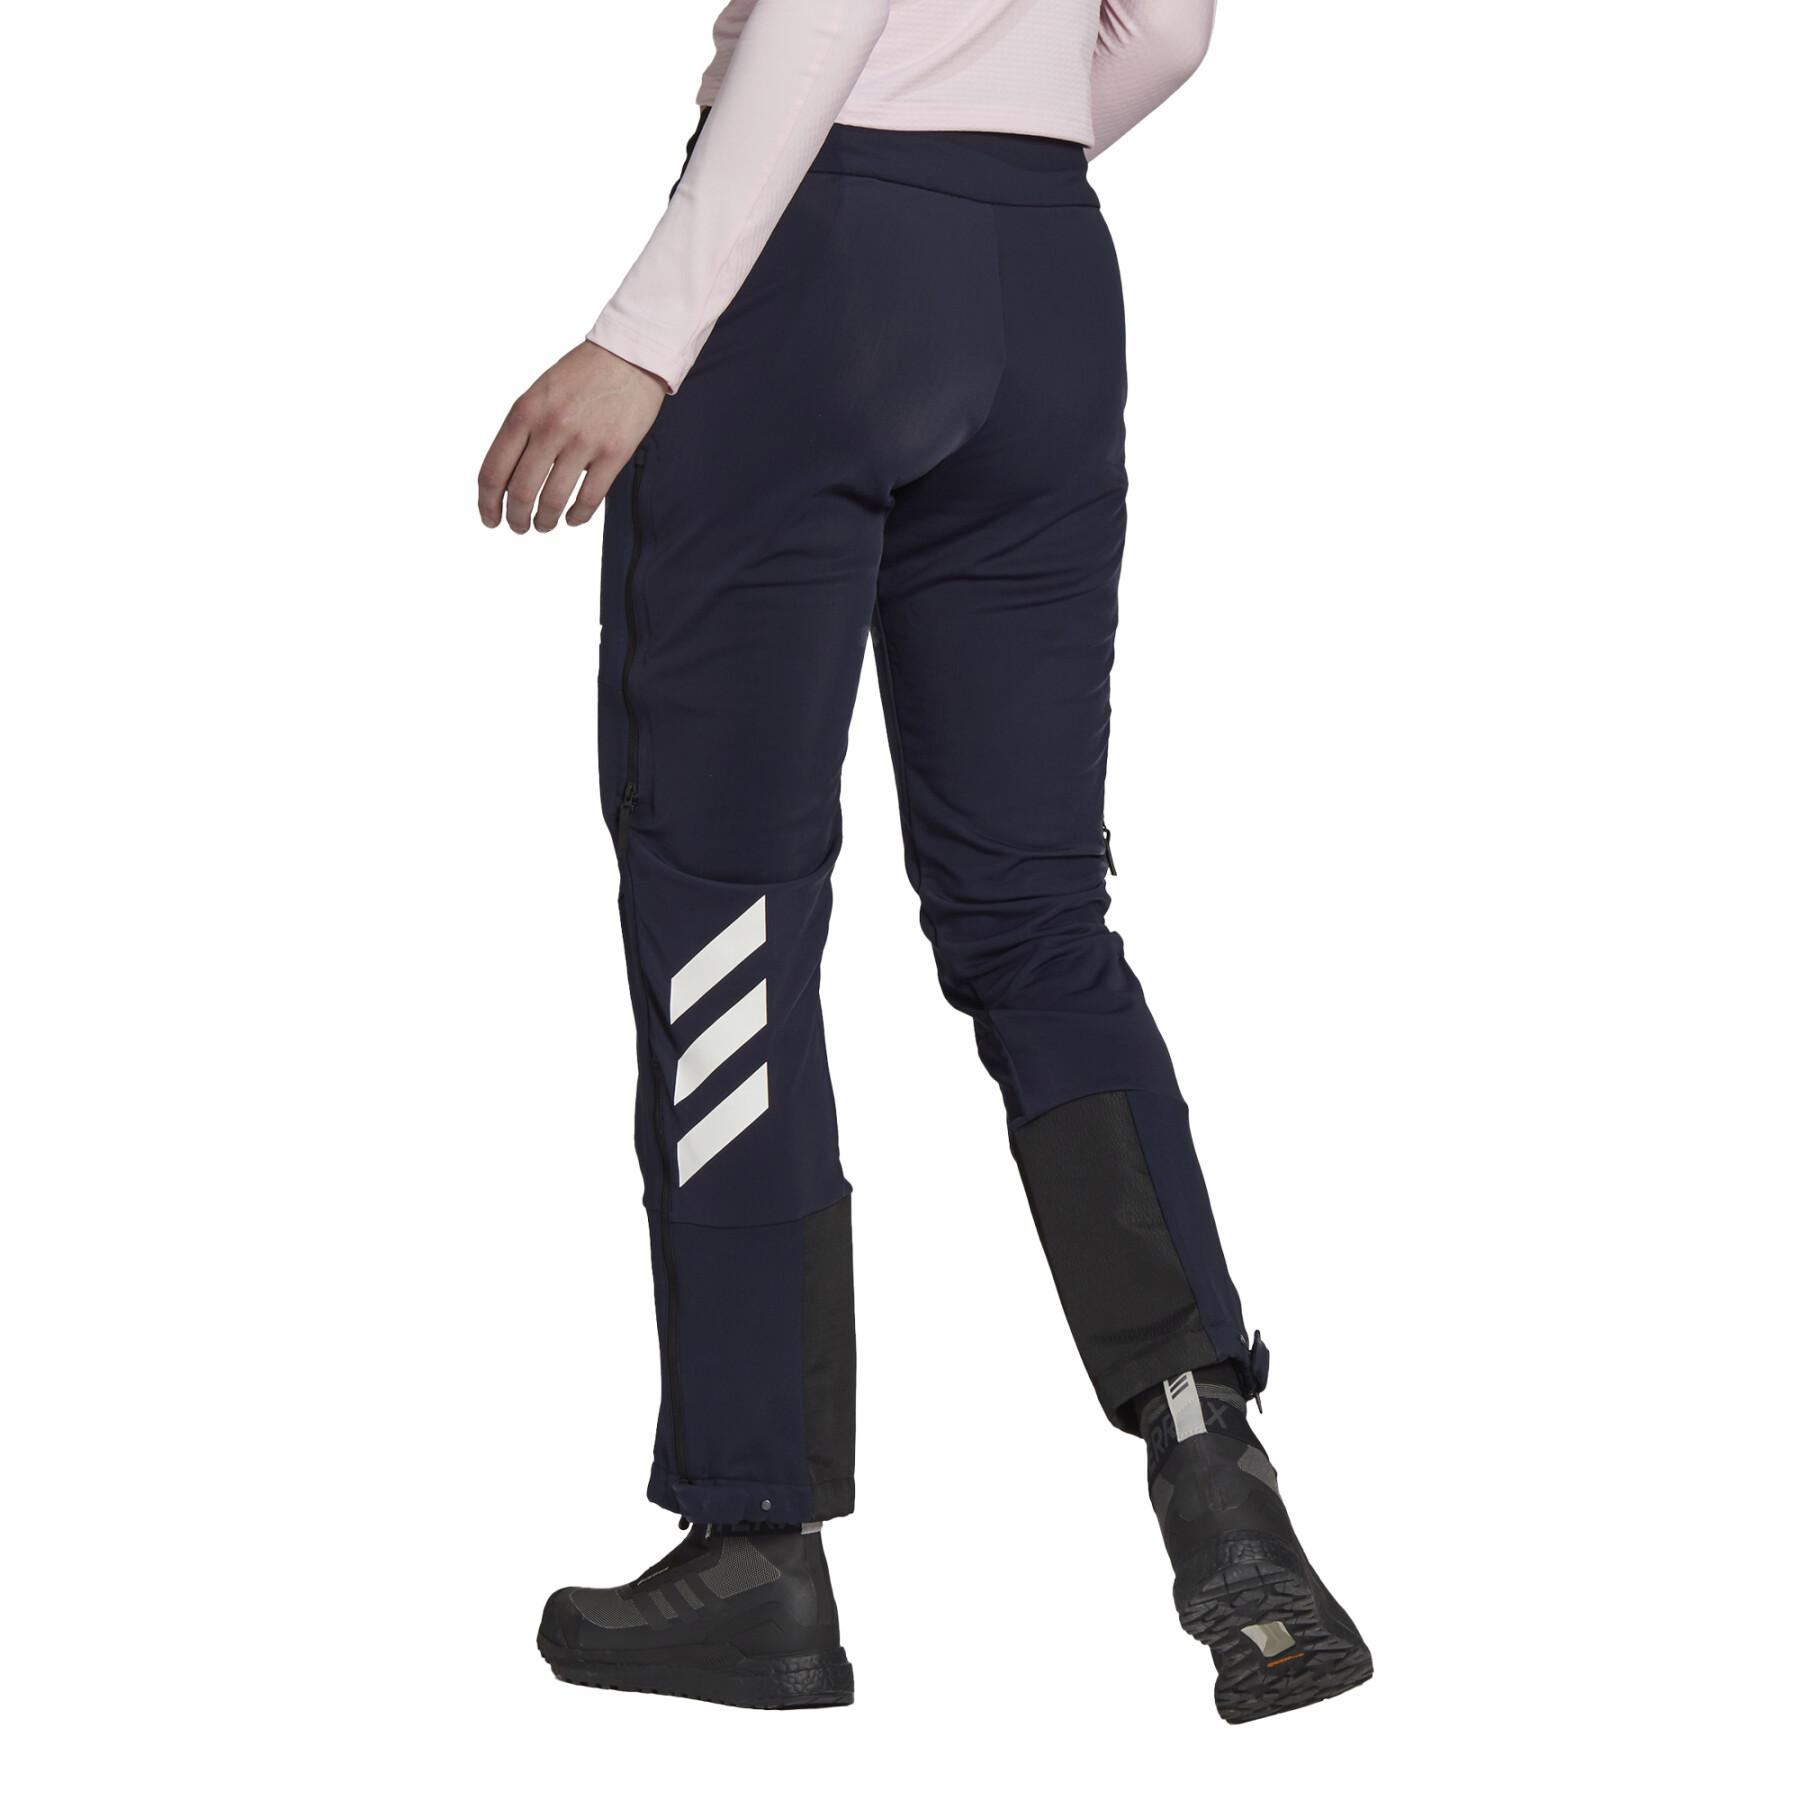 Women's trousers adidas Terrex Skyclimb Fast Ski Touring